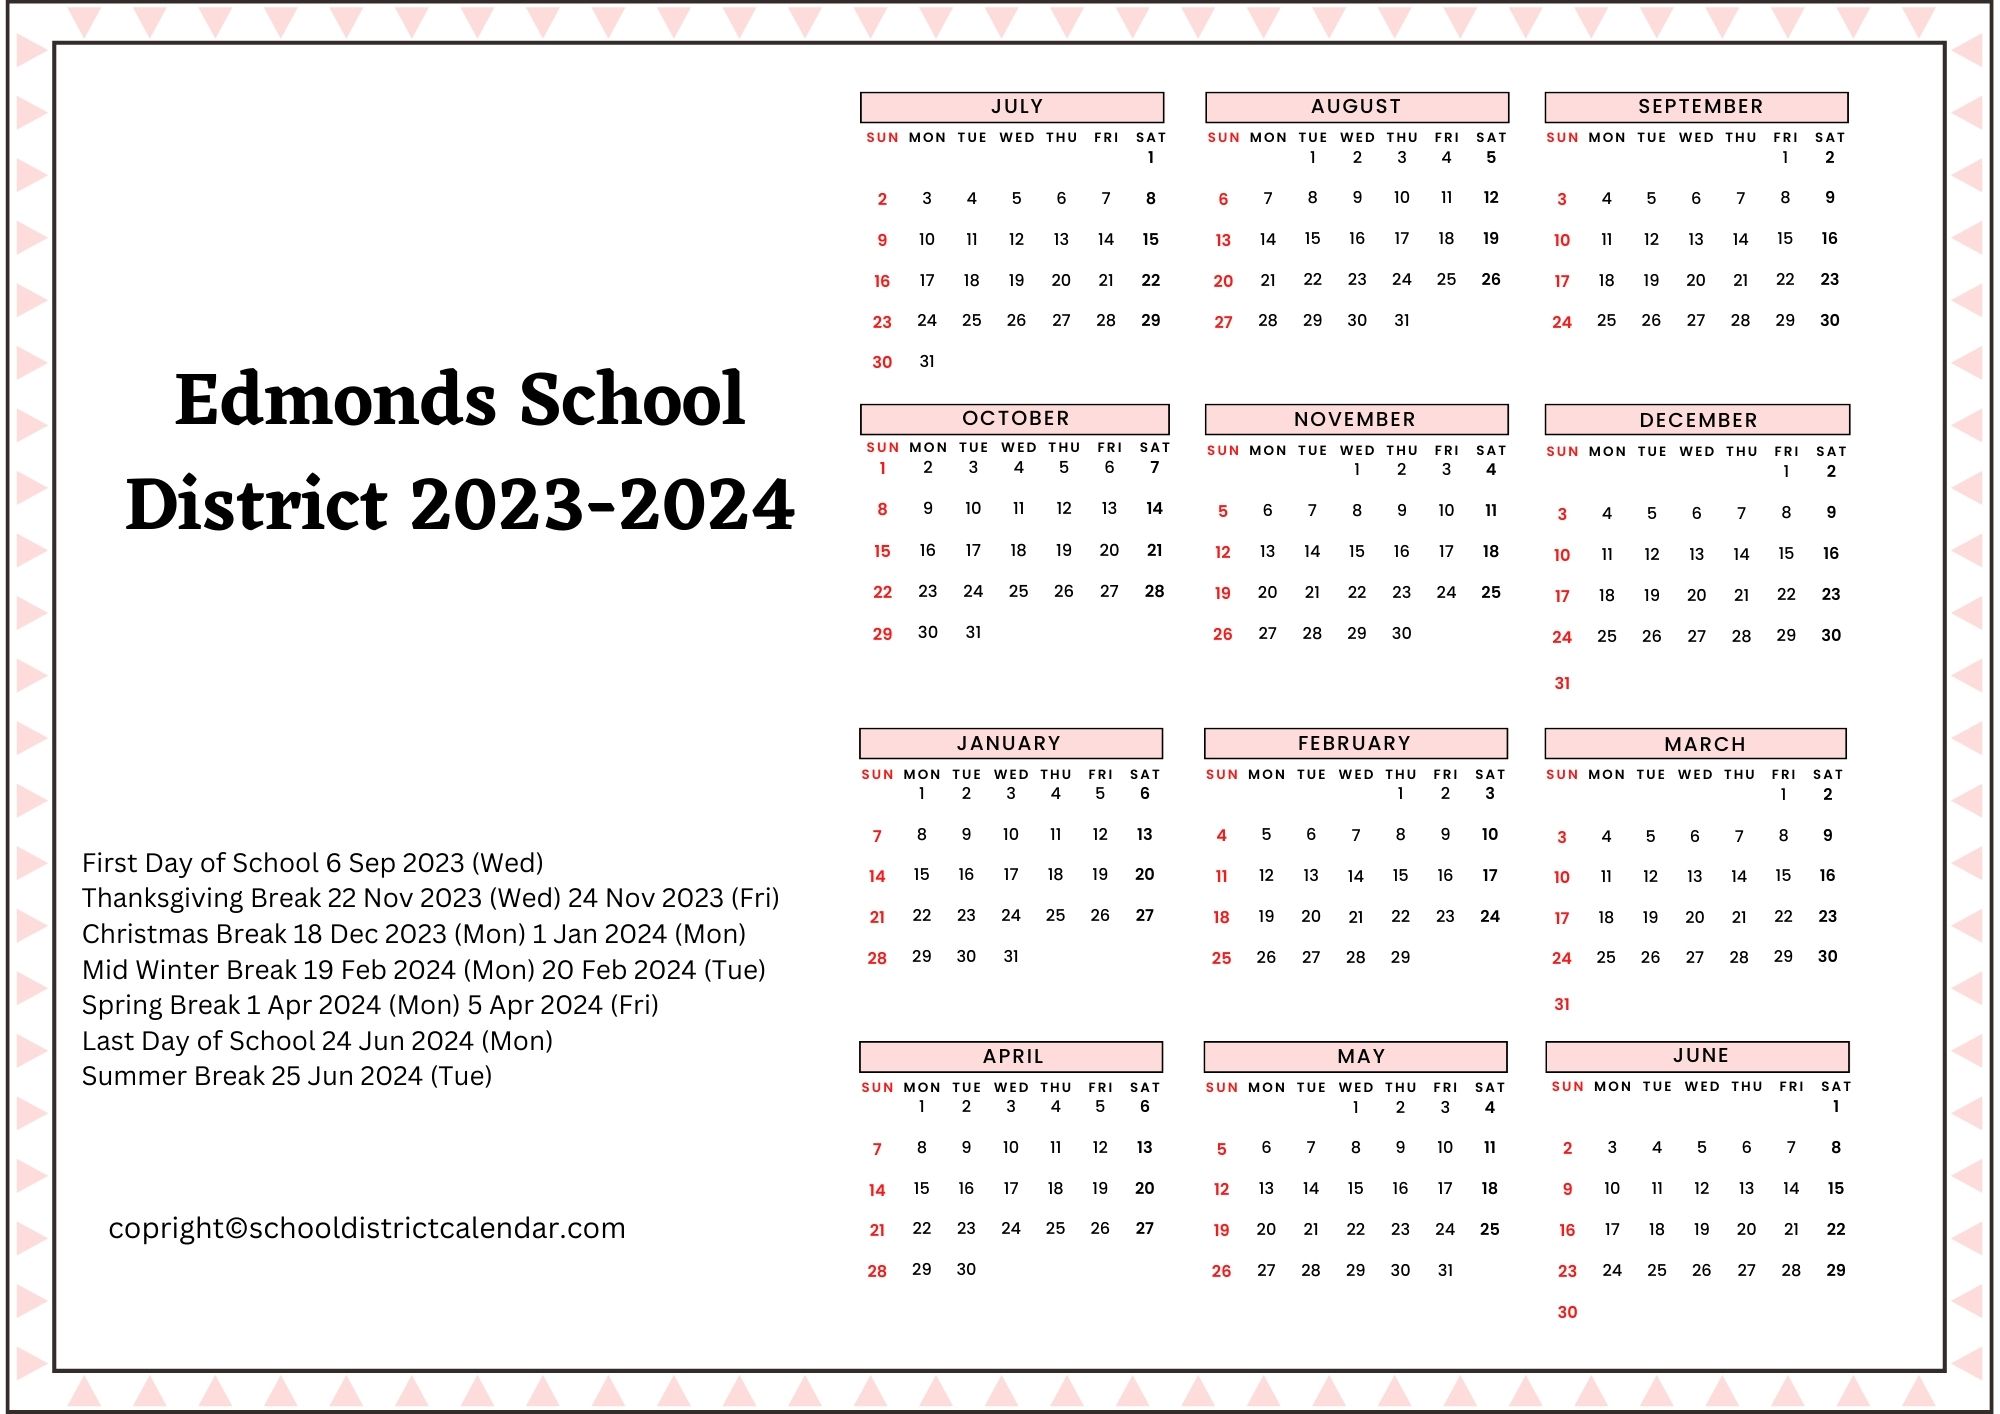 edmonds-school-district-calendar-holidays-2023-2024